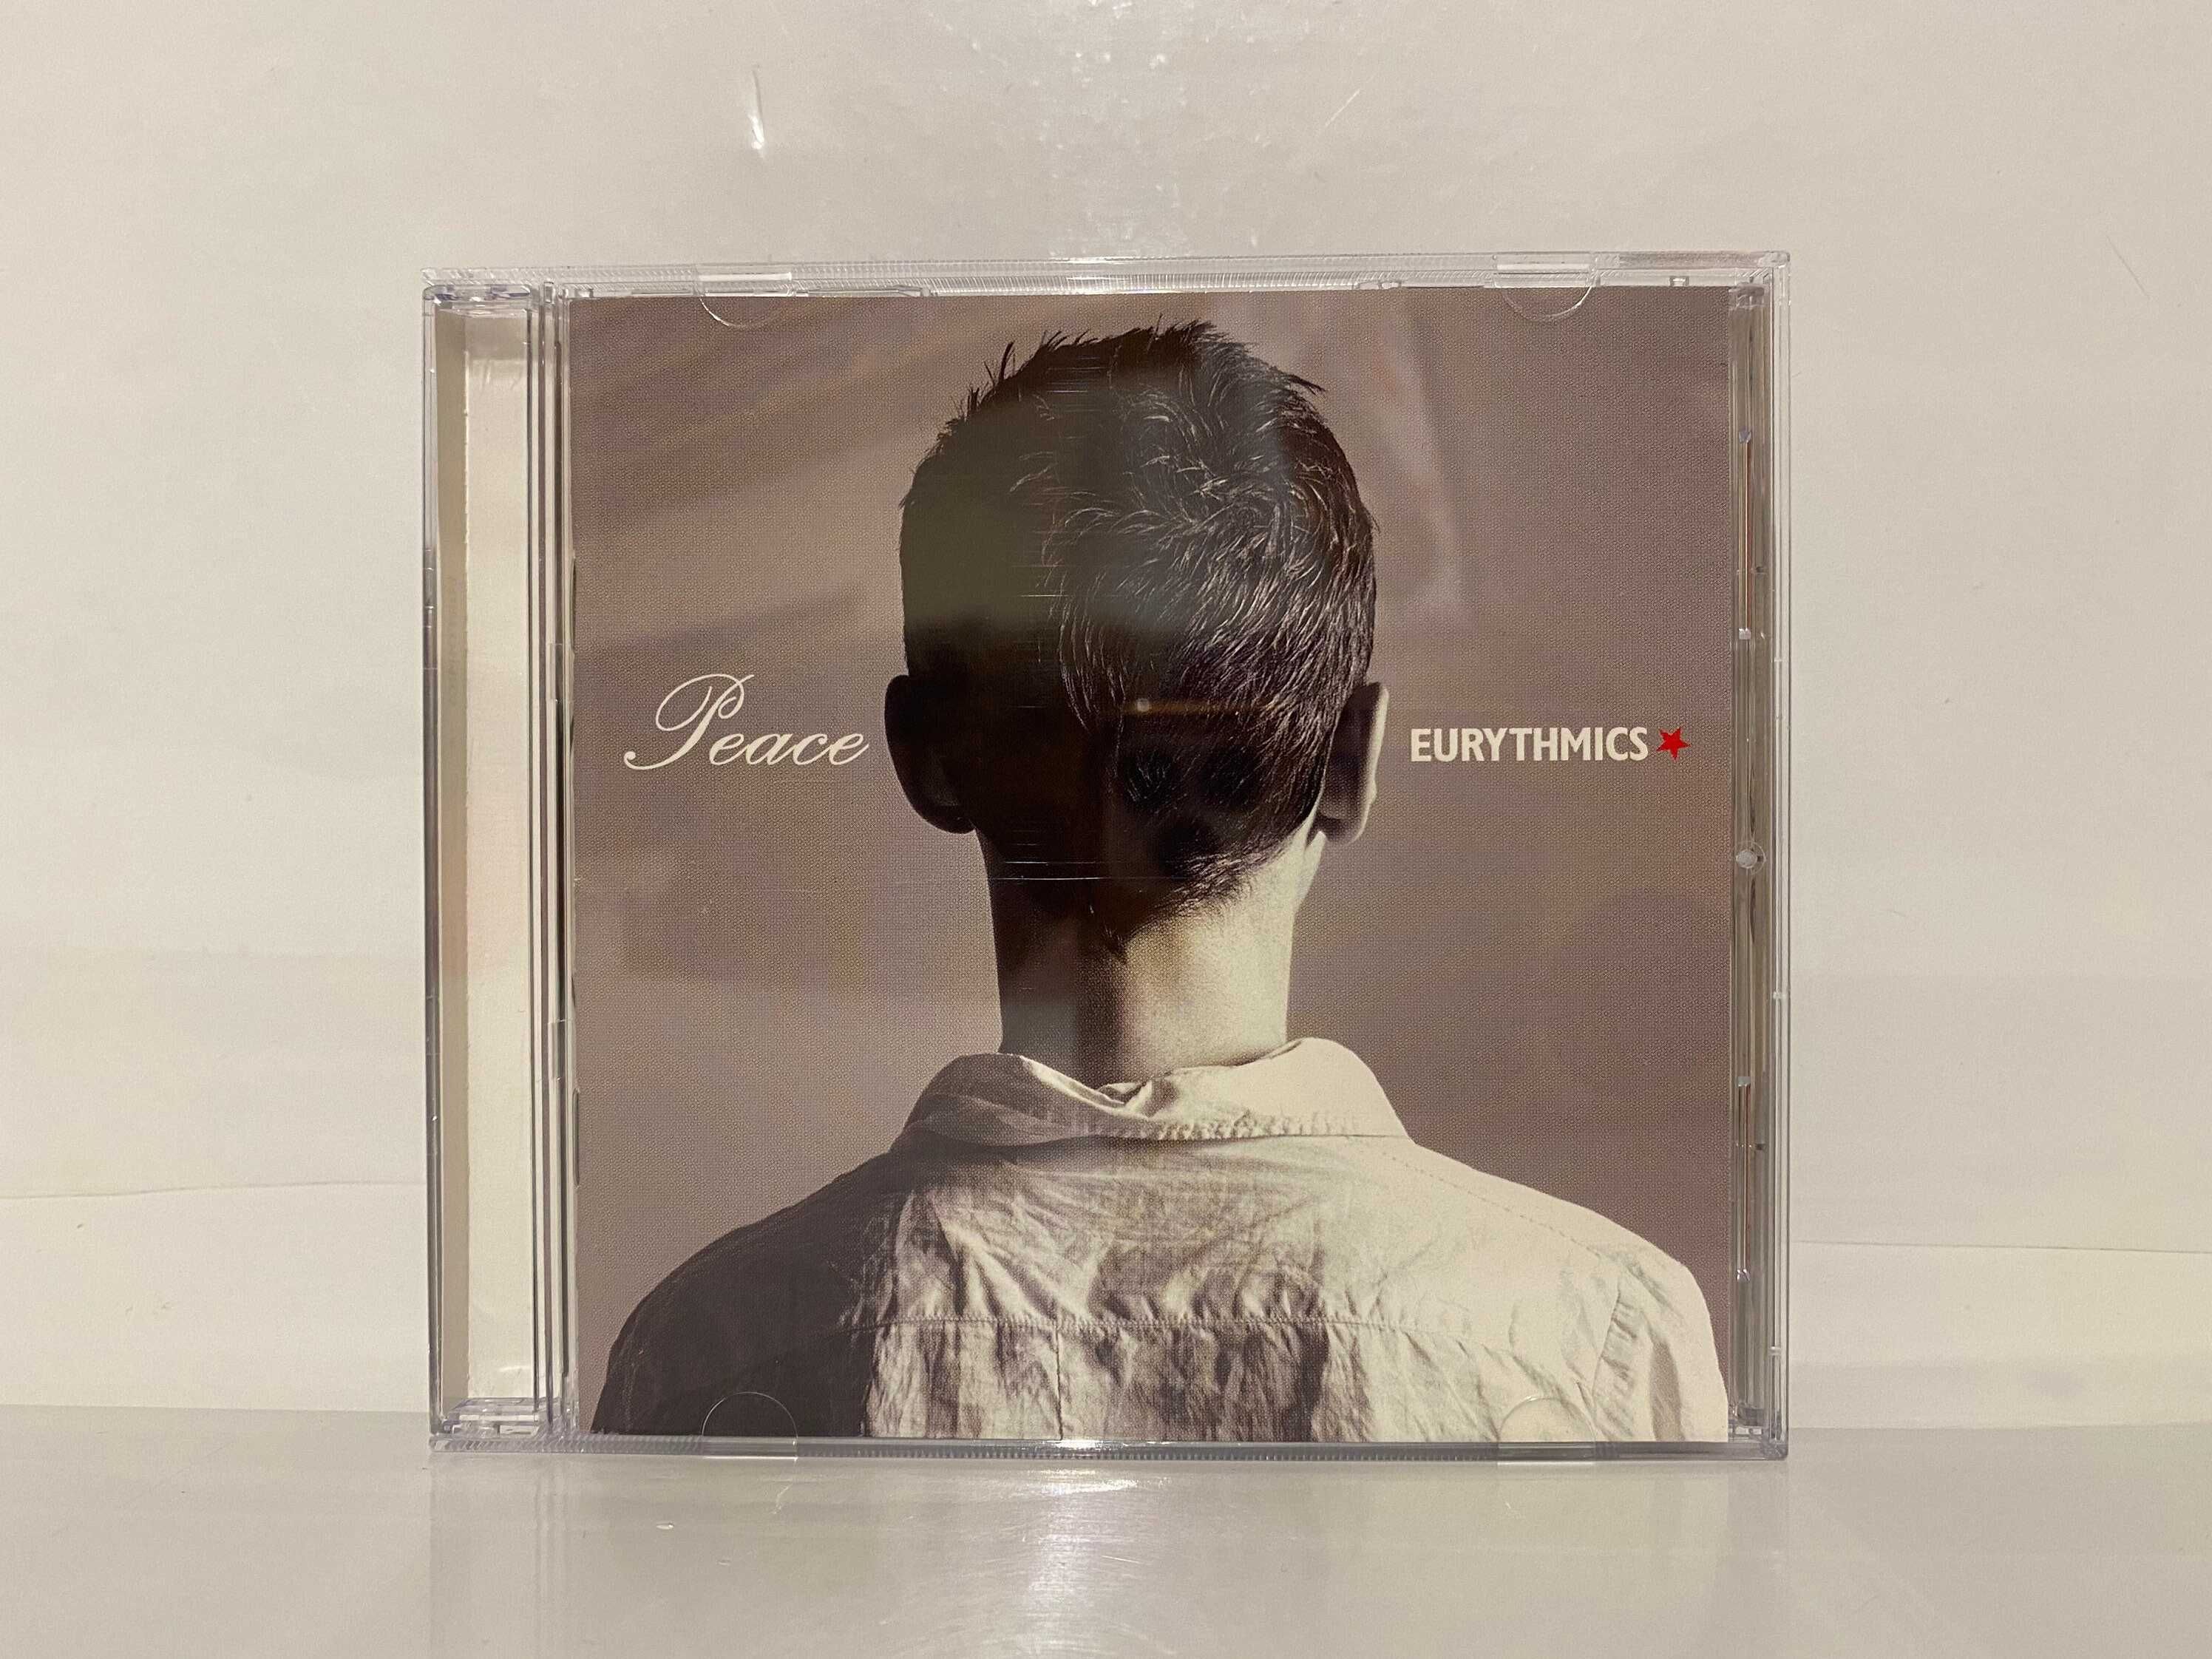 Eurythmics - Peace cd album